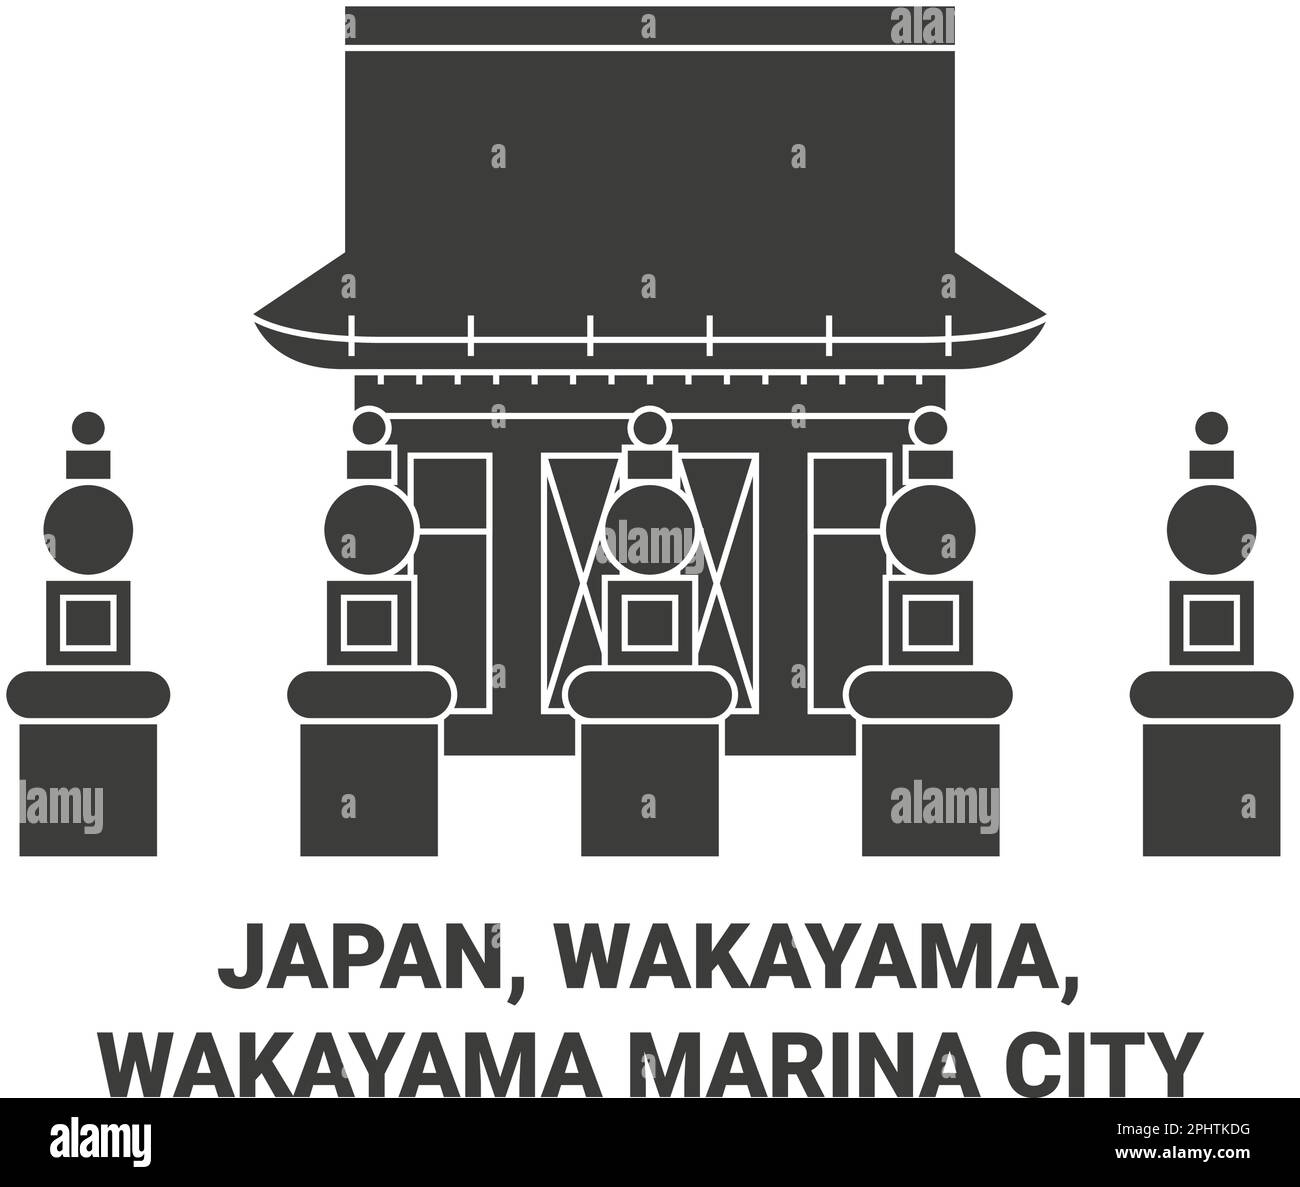 Japan, Wakayama, Wakayama Marina City travel landmark vector illustration Stock Vector